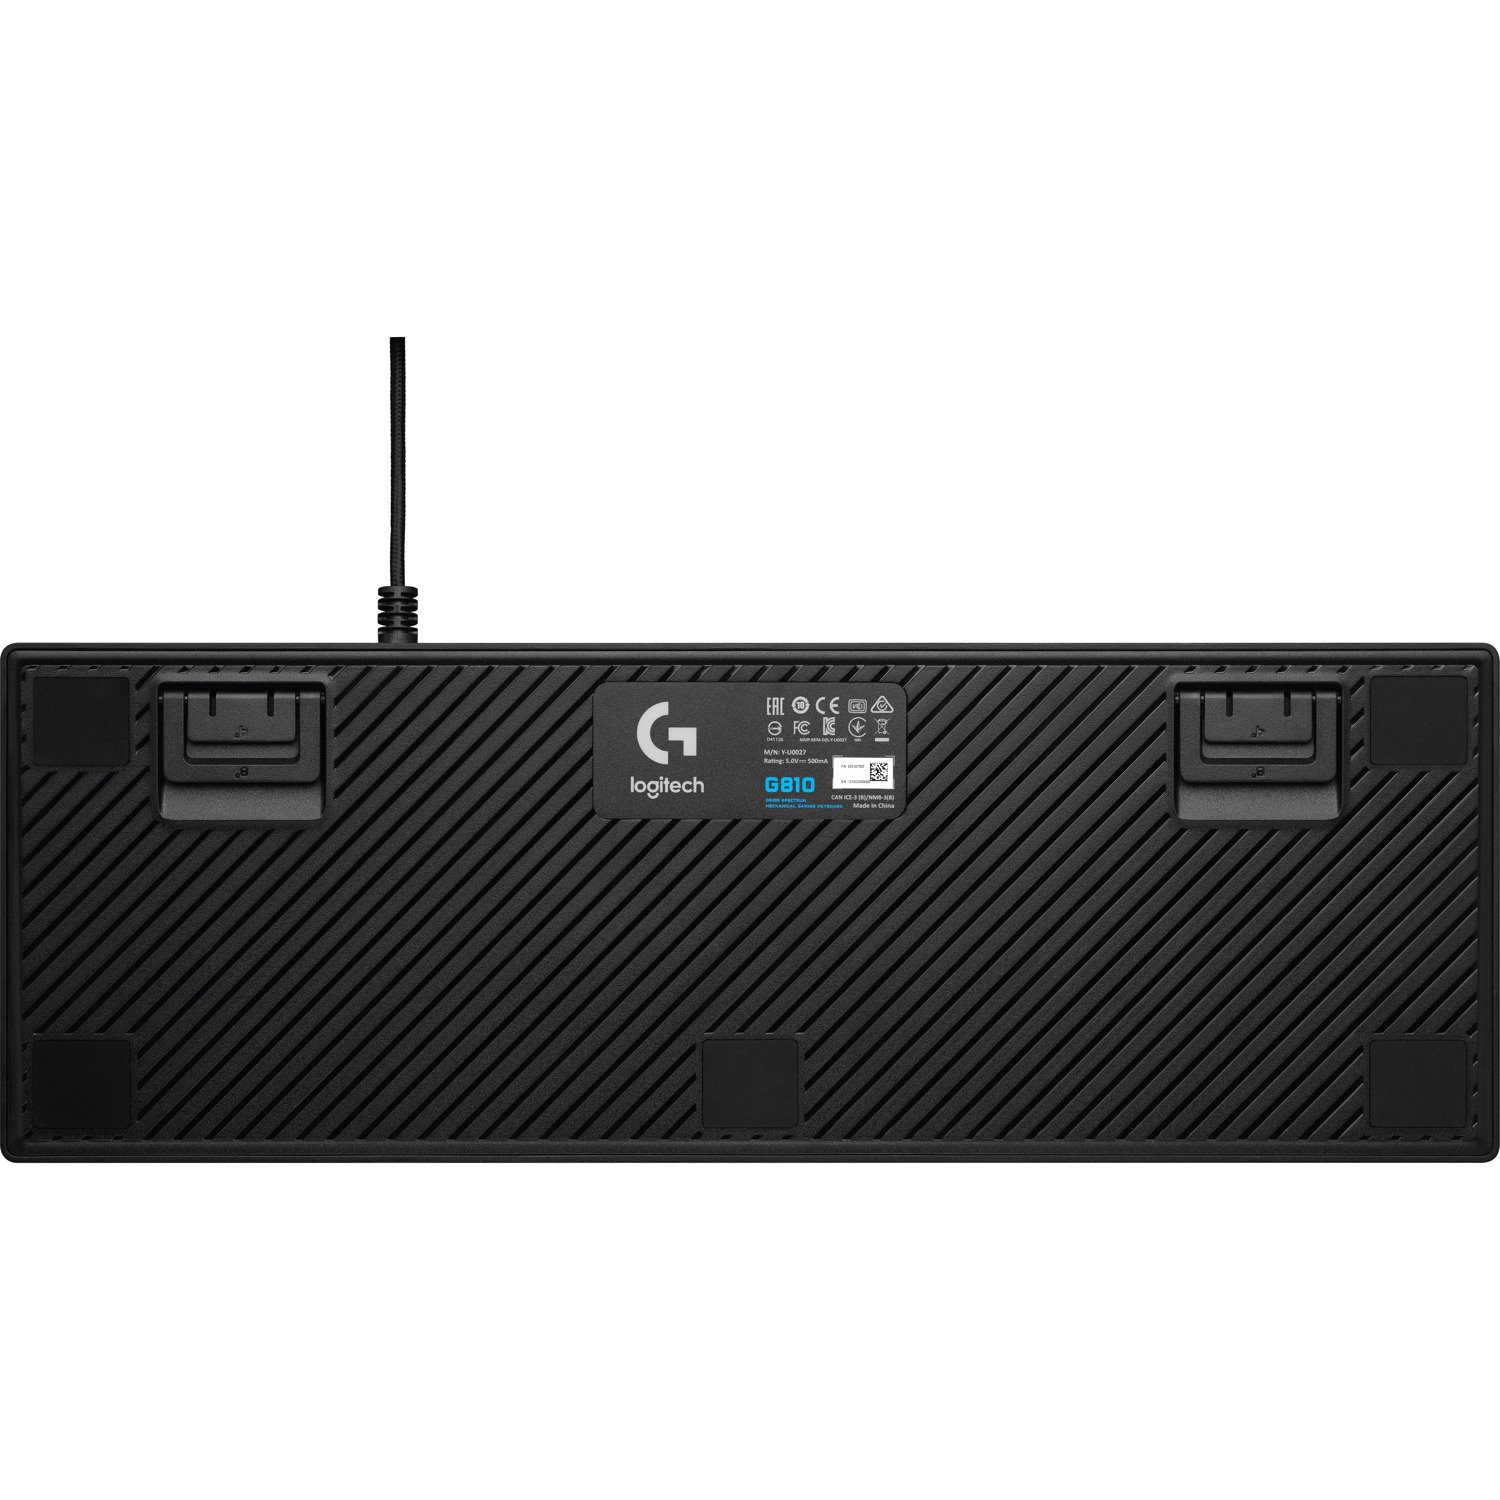 Logitech Orion Spectrum G810 Keyboard - Cable Connectivity - USB 2.0 Interface - English (UK) - Black